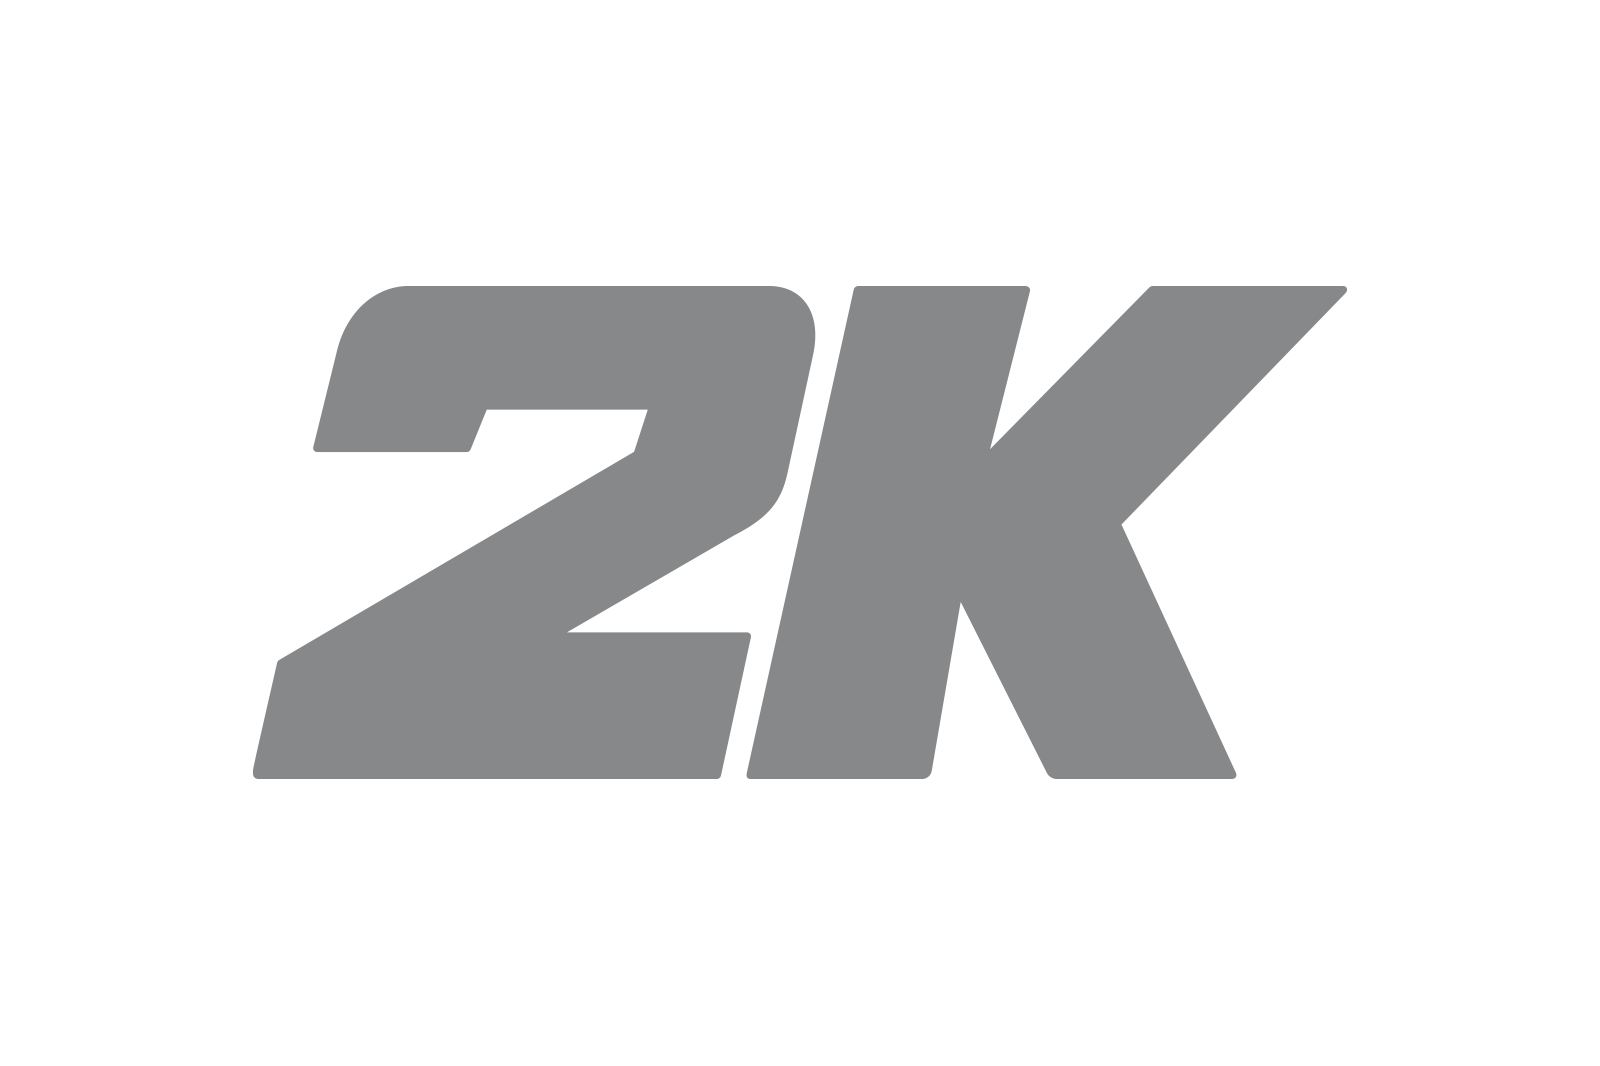 melonkicks-clients-logos-2k.png